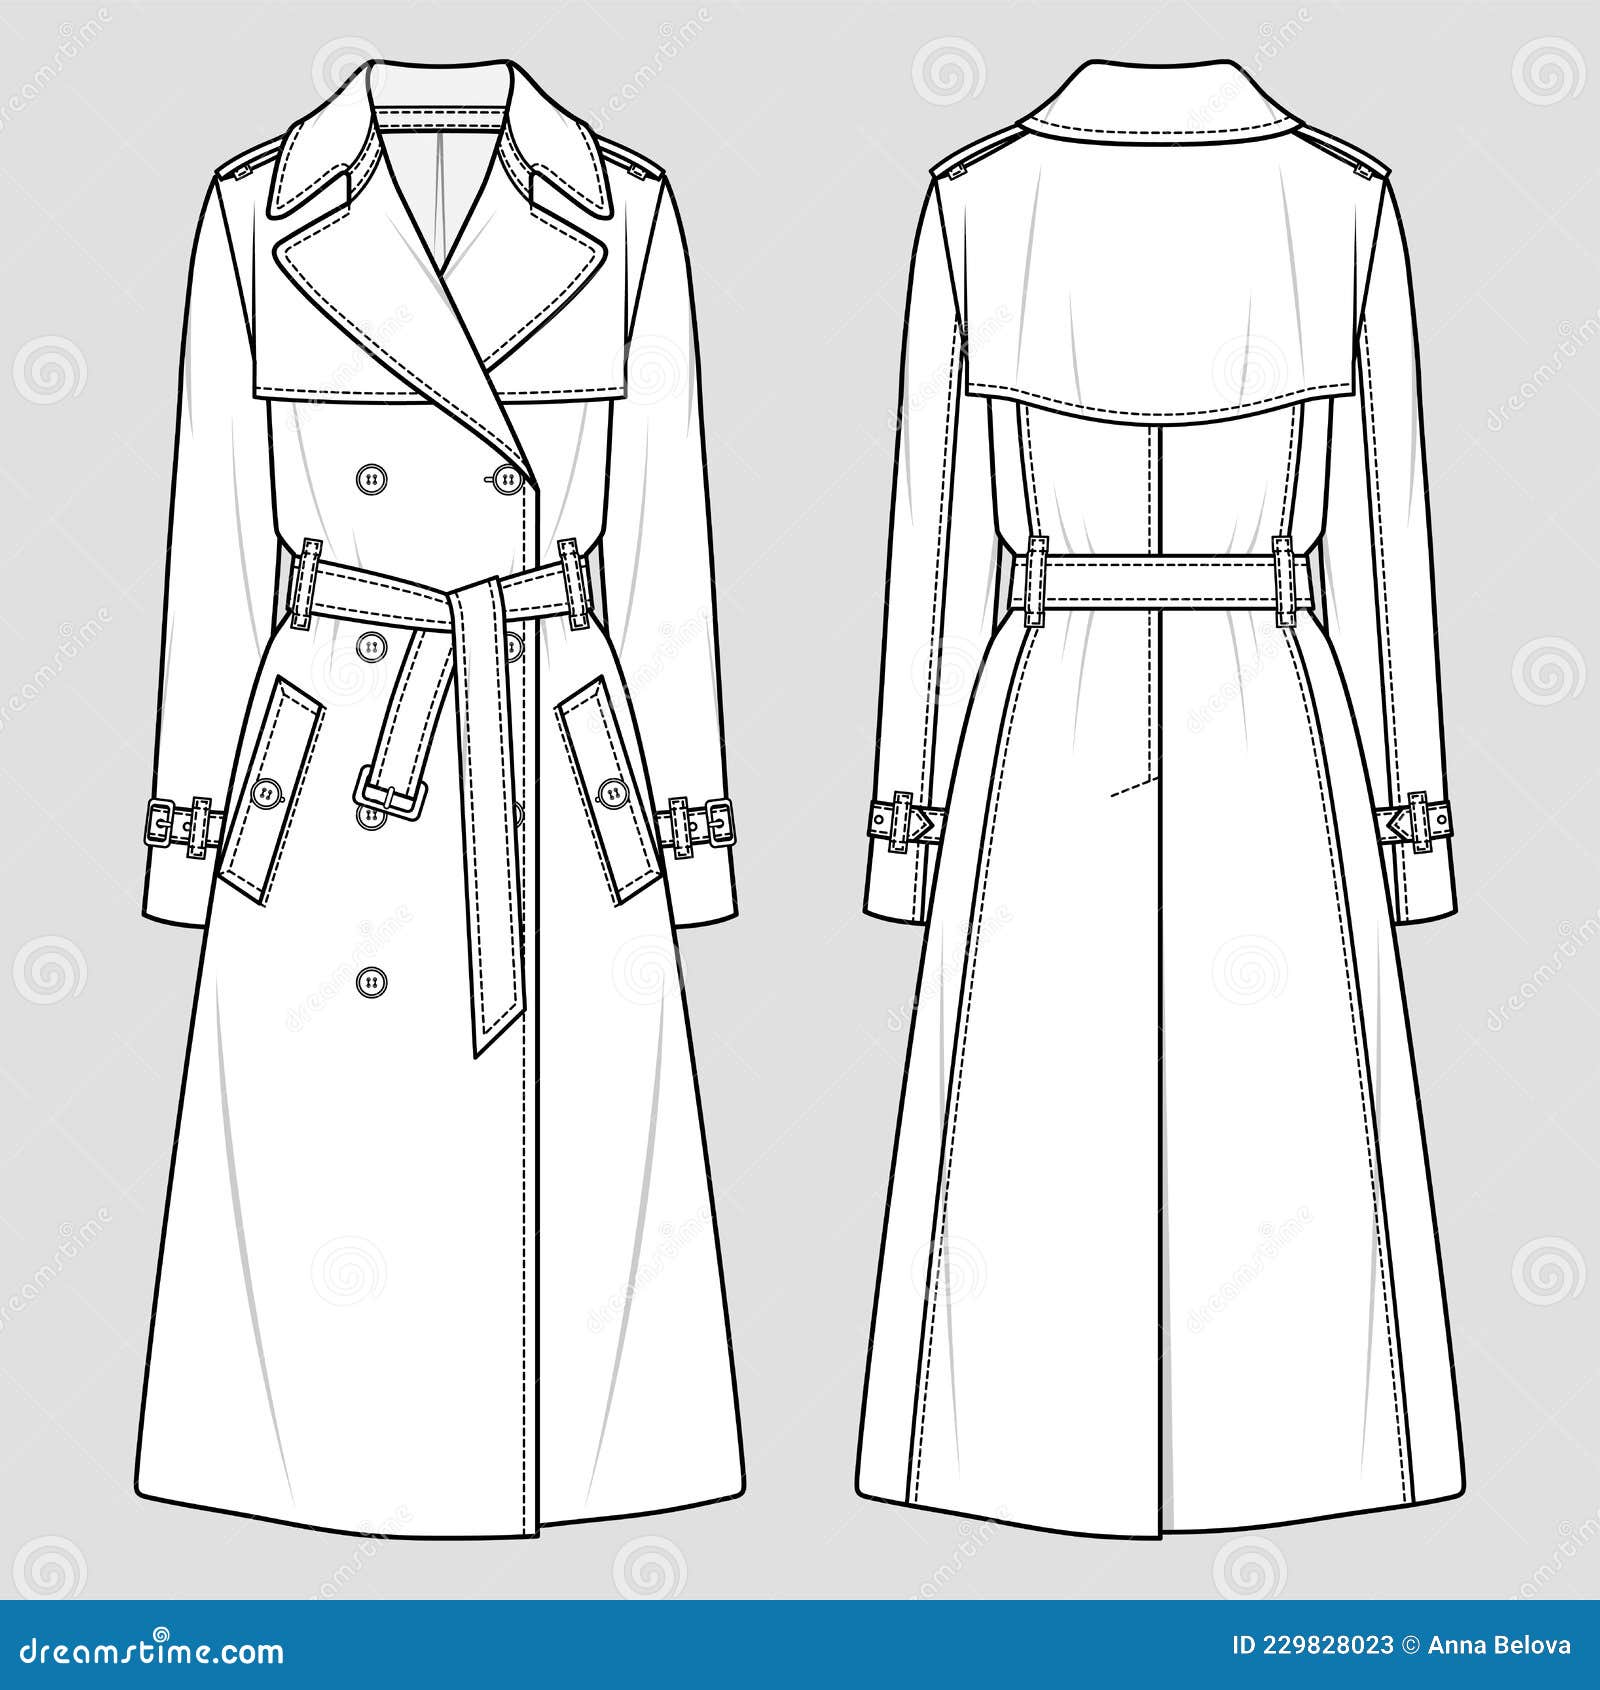 Womens trench coat stock vector. Illustration of jacket - 229828023